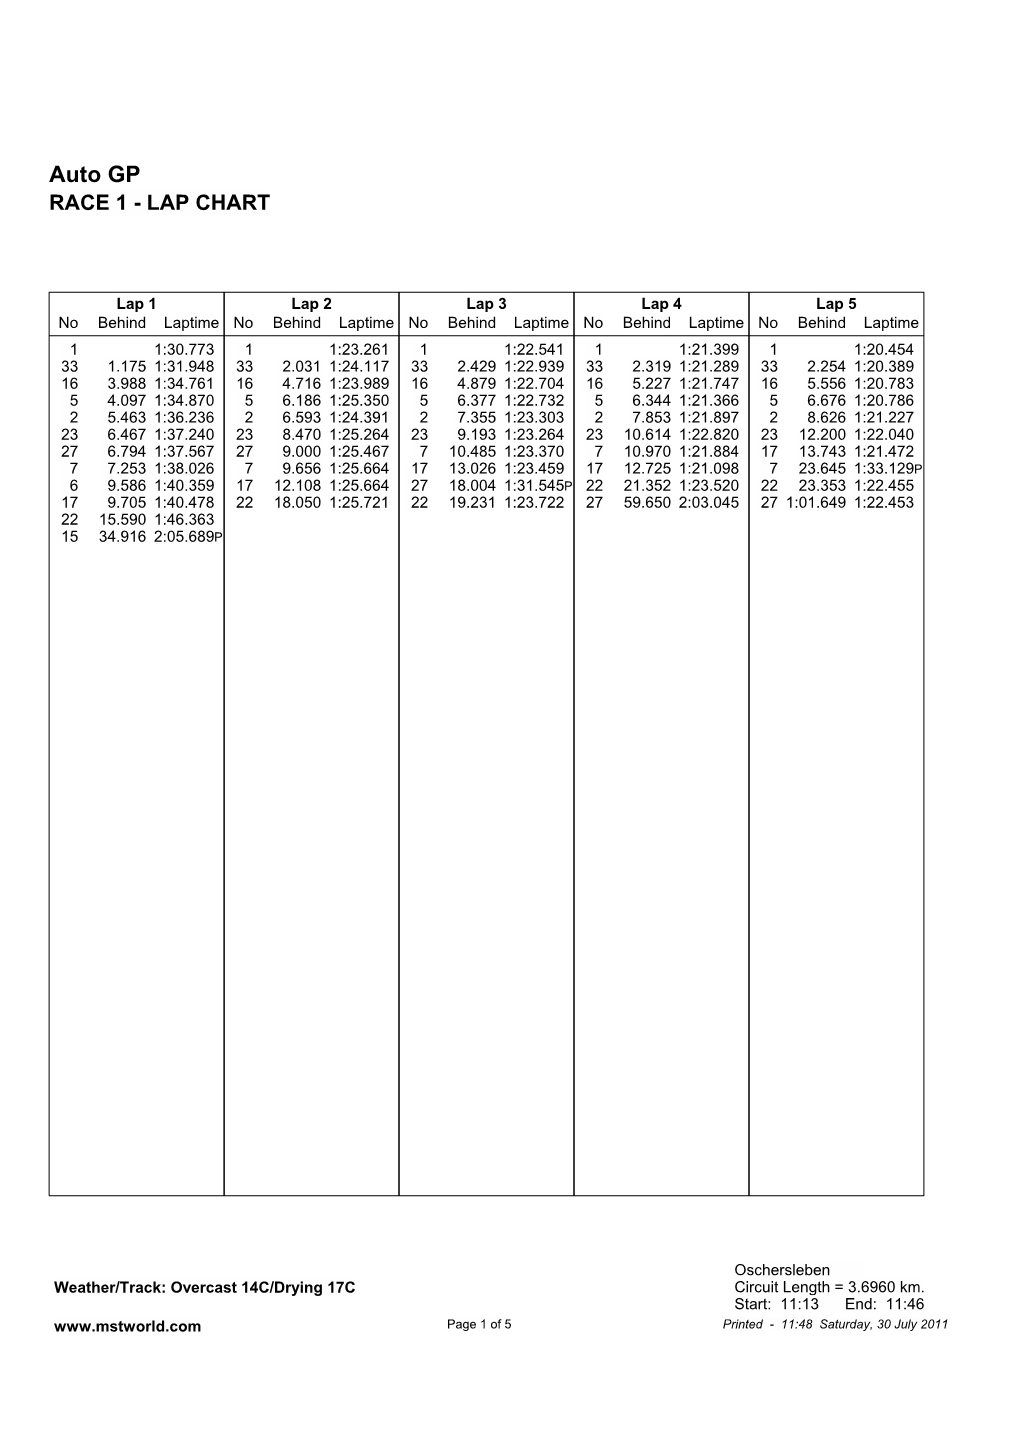 Auto GP RACE 1 - LAP CHART